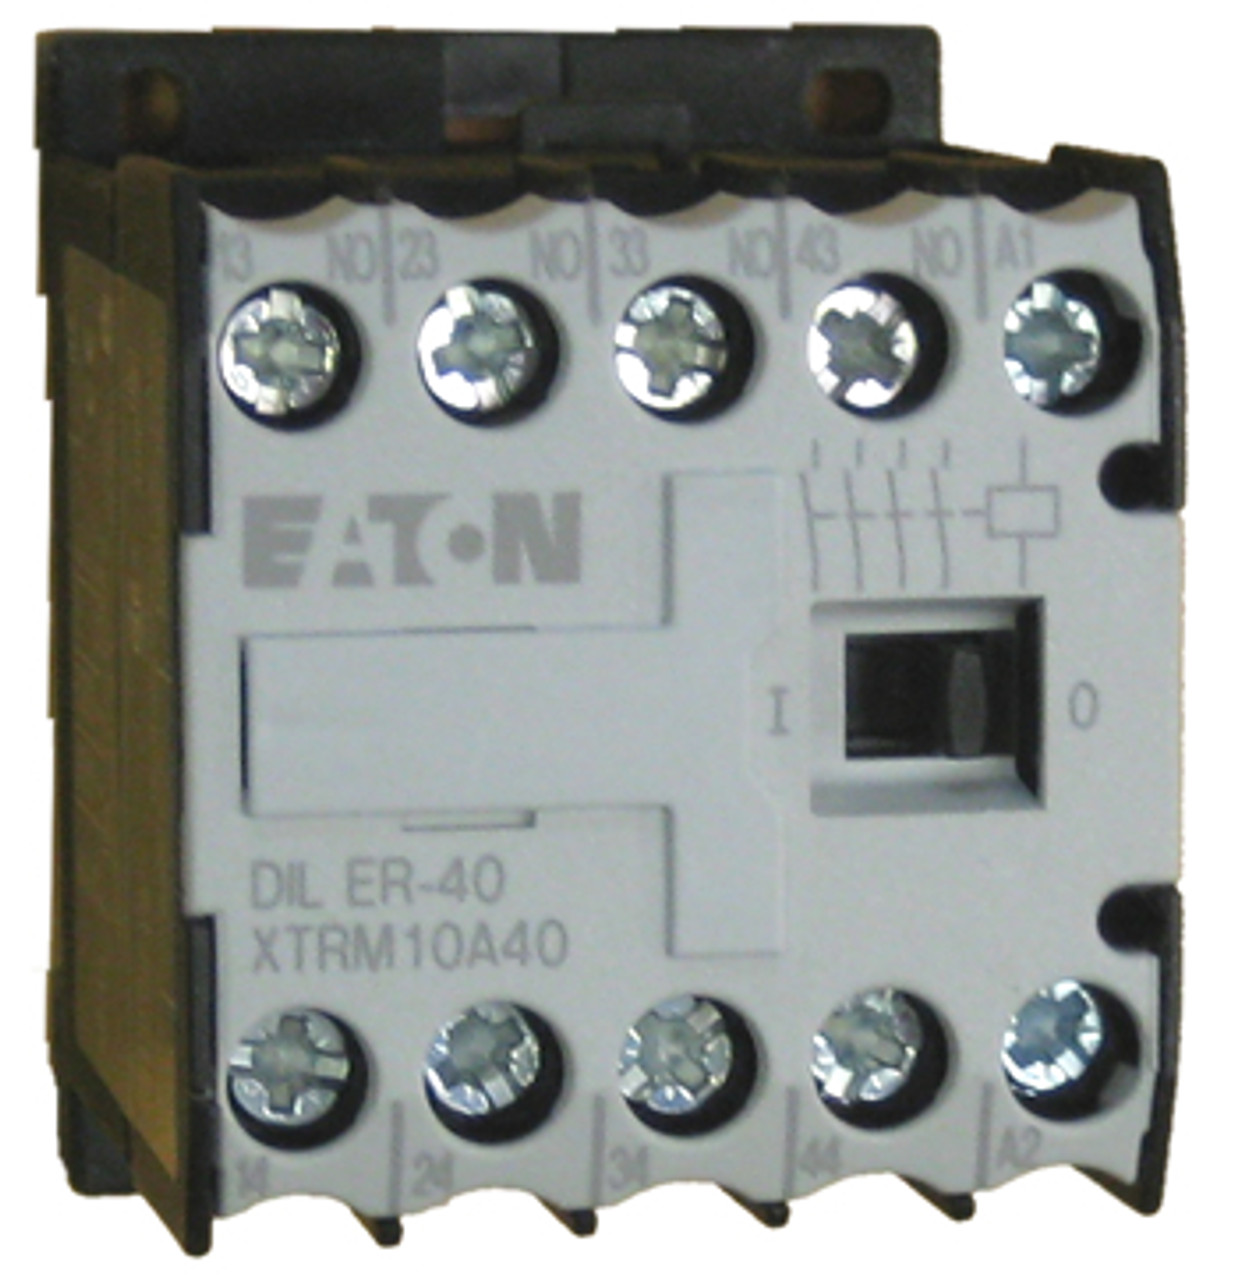 Eaton XTRM10A40W miniature relay